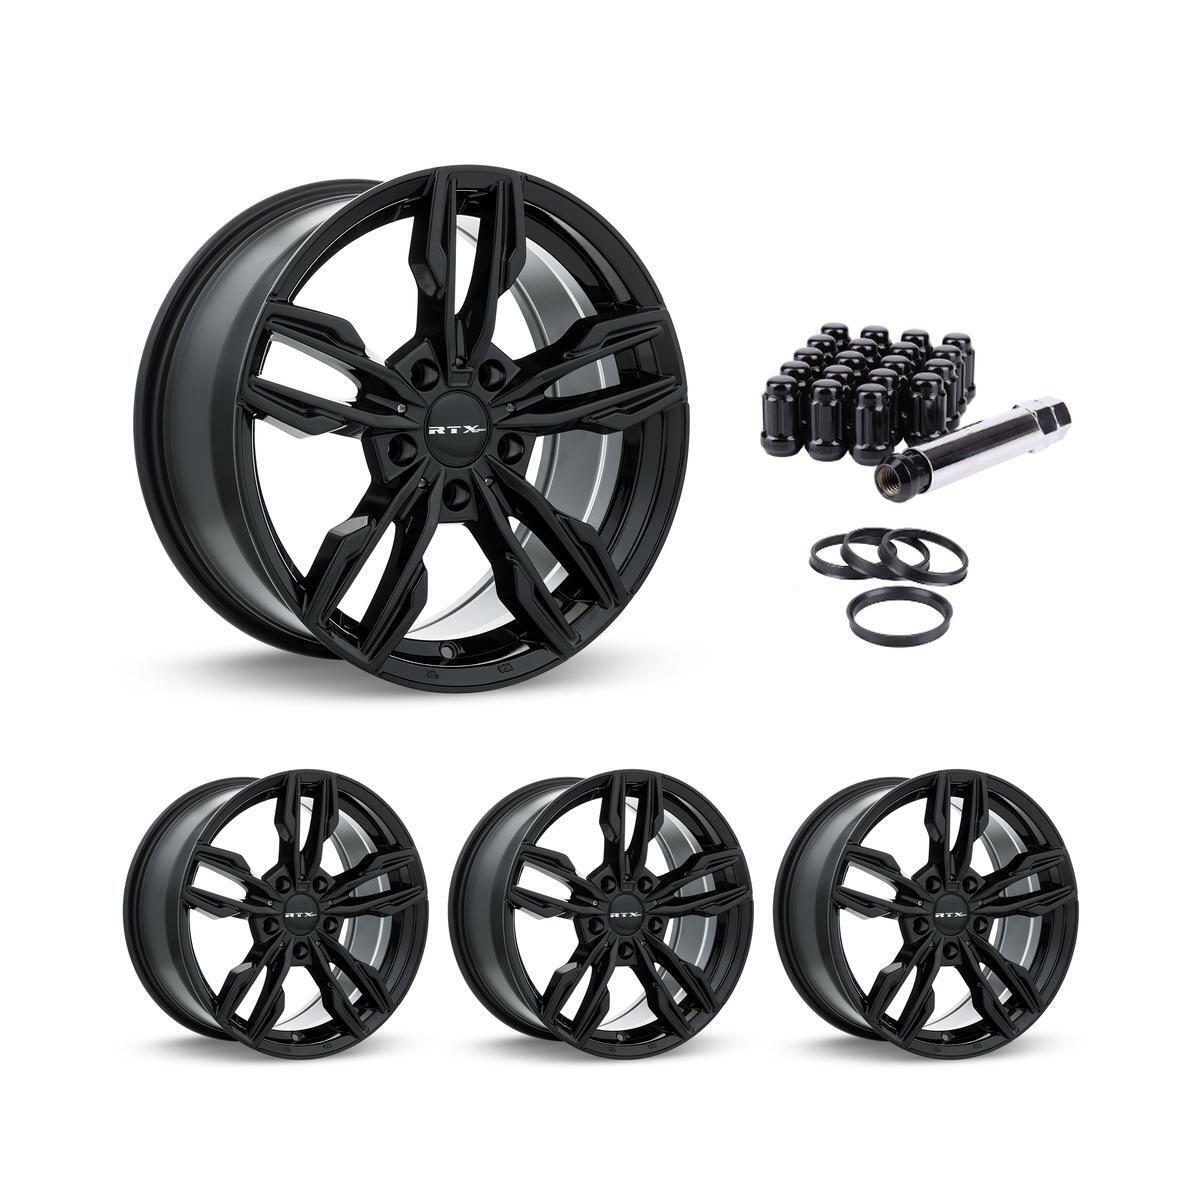 Wheel Rims Set with Black Lug Nuts Kit for 00 BMW 323Ci P861702 17 inch